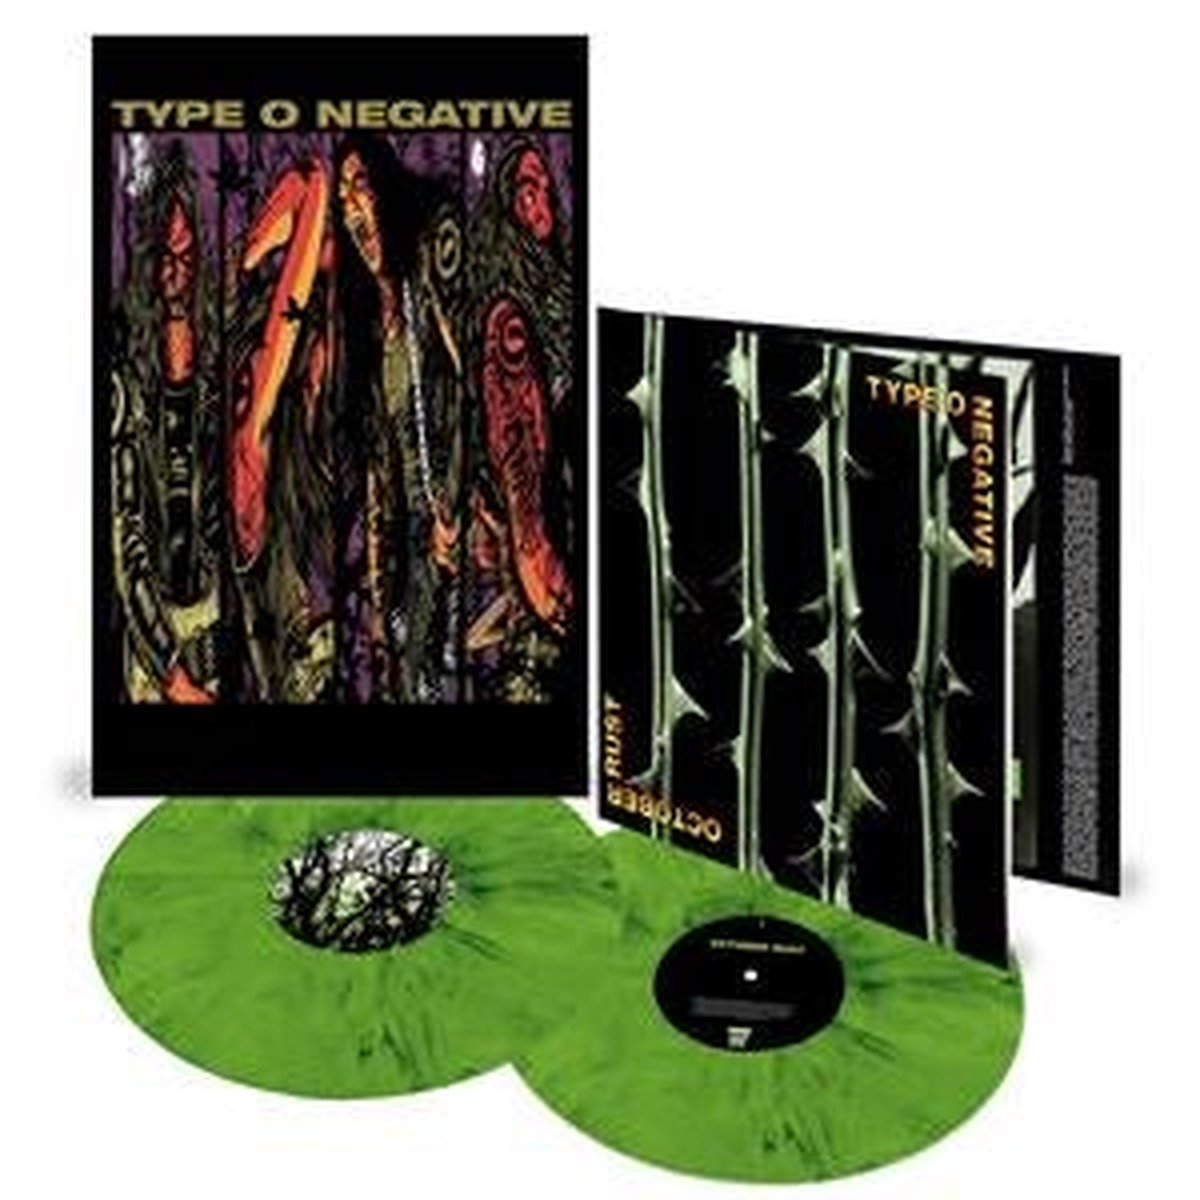 Type O Negative - October Rust (Deluxe)